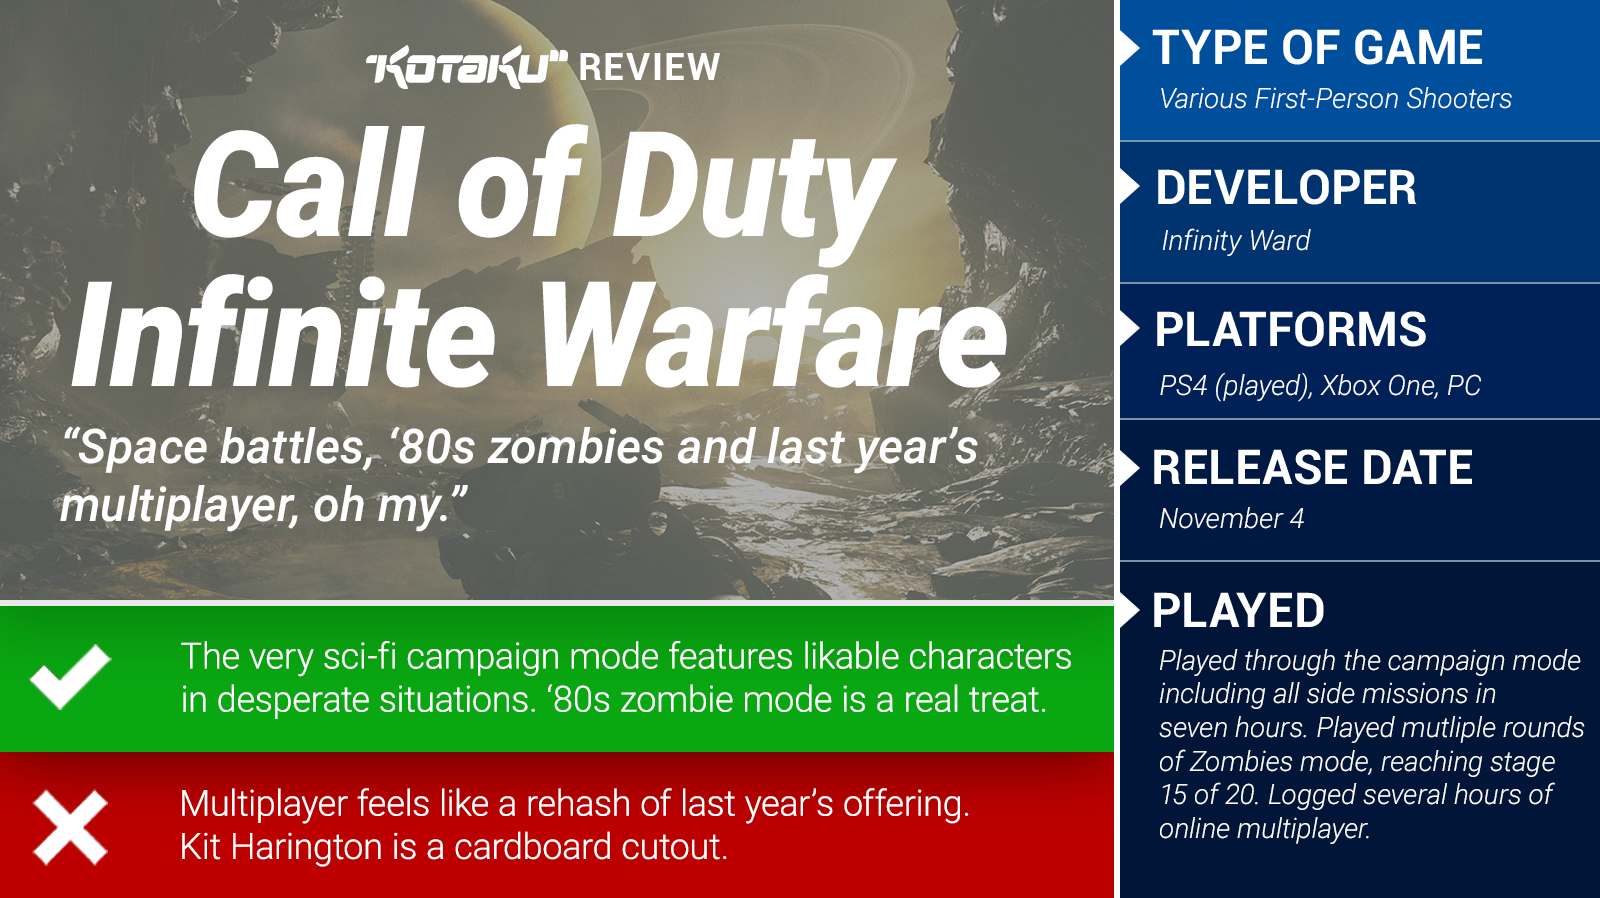 Call Of Duty: Infinite Warfare: The Kotaku Review